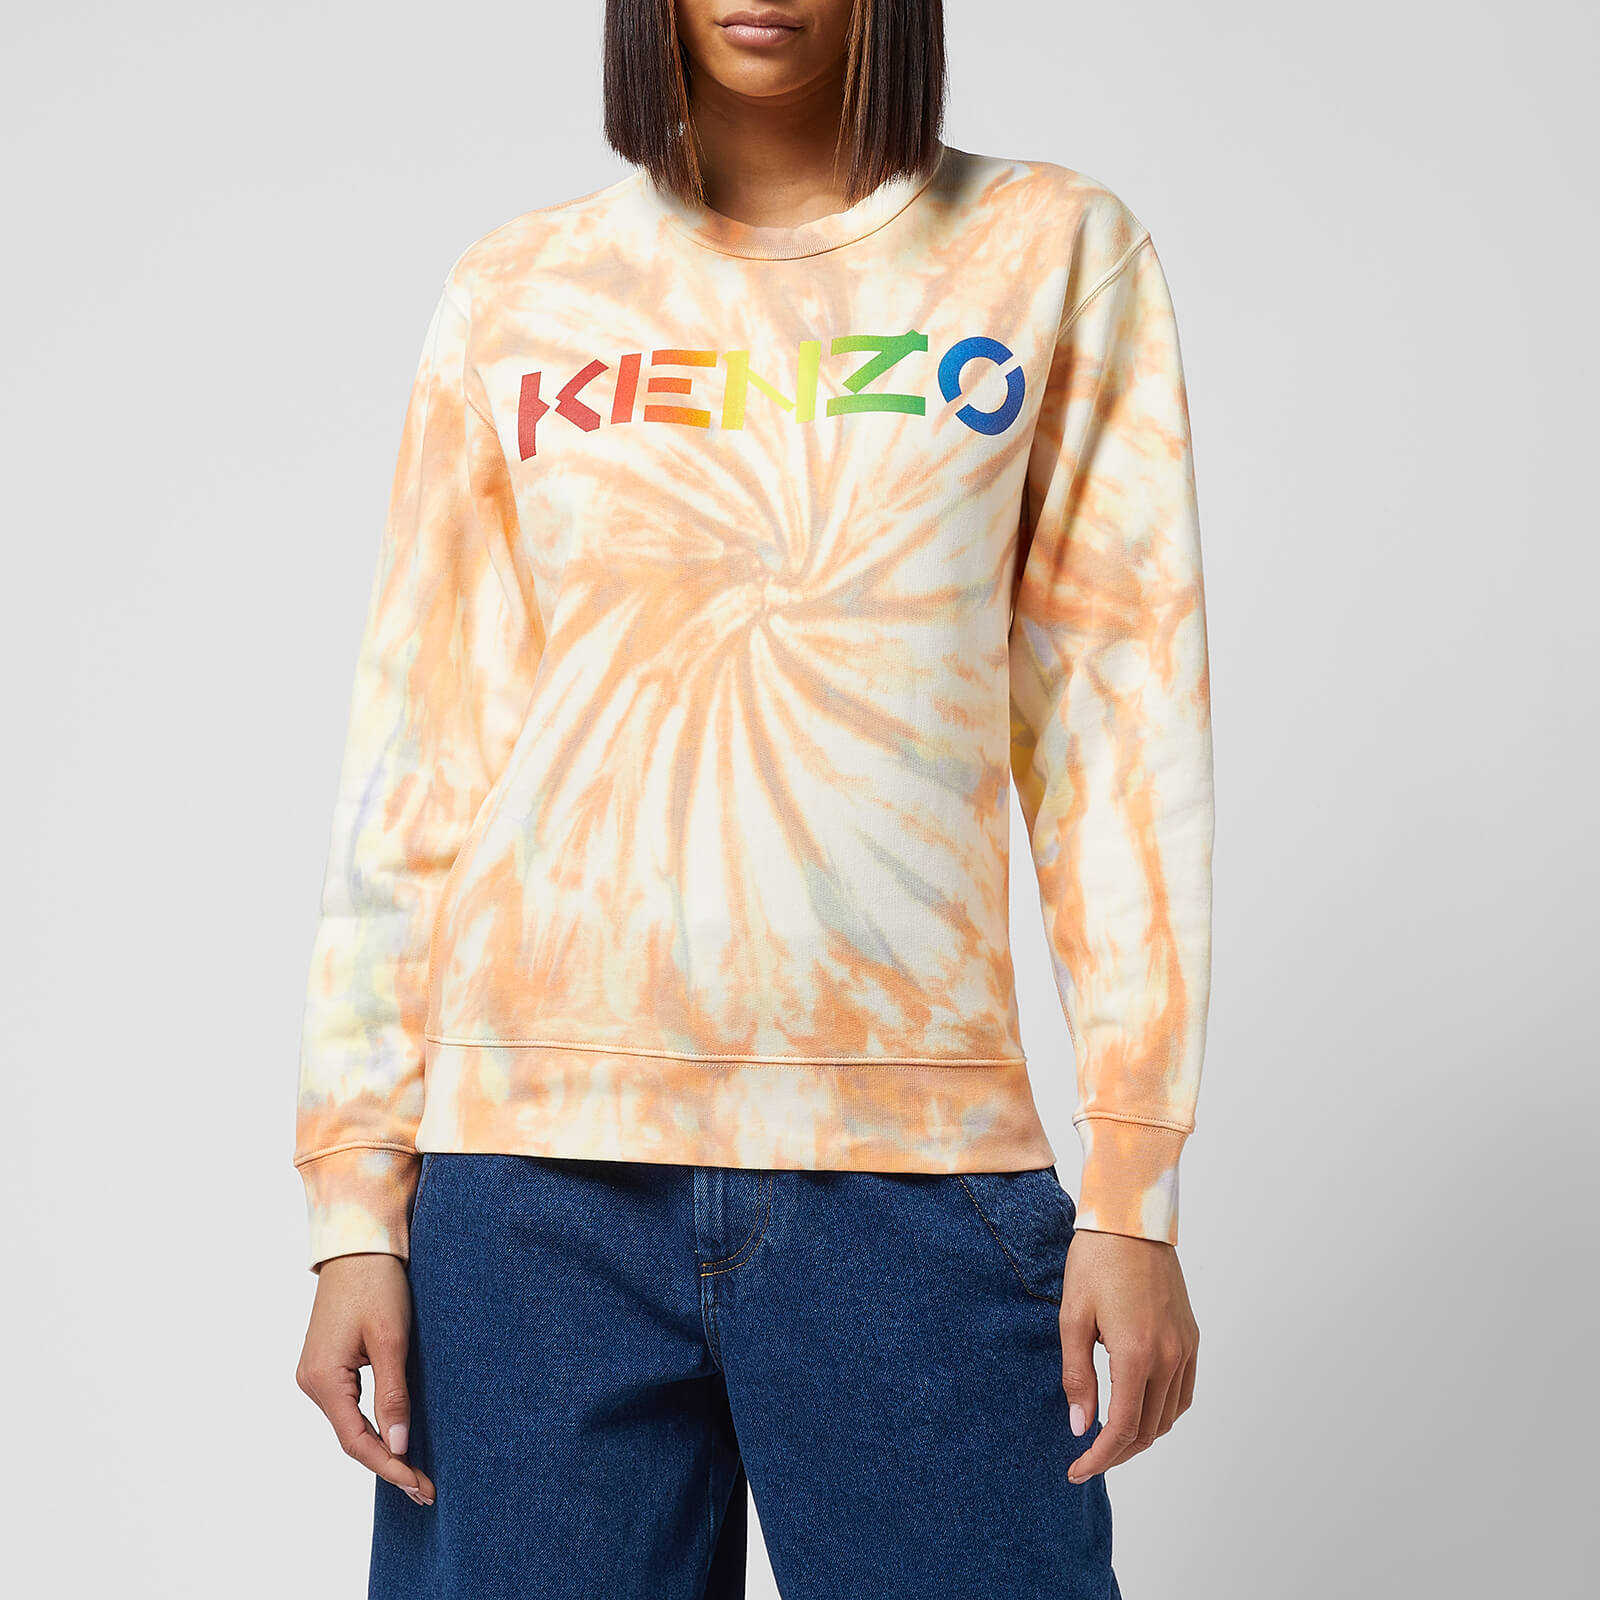 kenzo women's kenzo logo classic sweatshirt - peach - xs